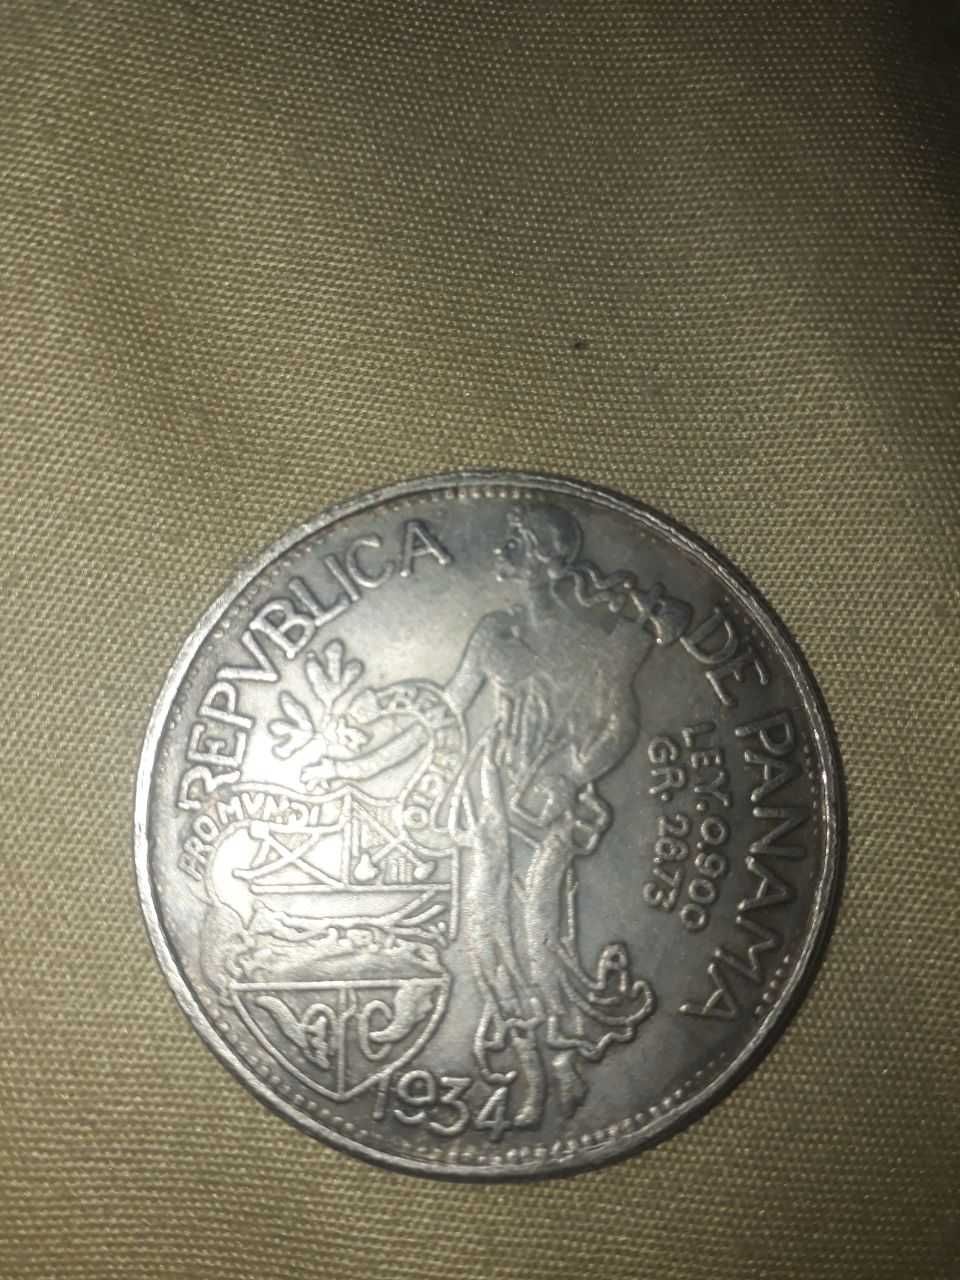 Стари редки американски монети 0т 1902 натам